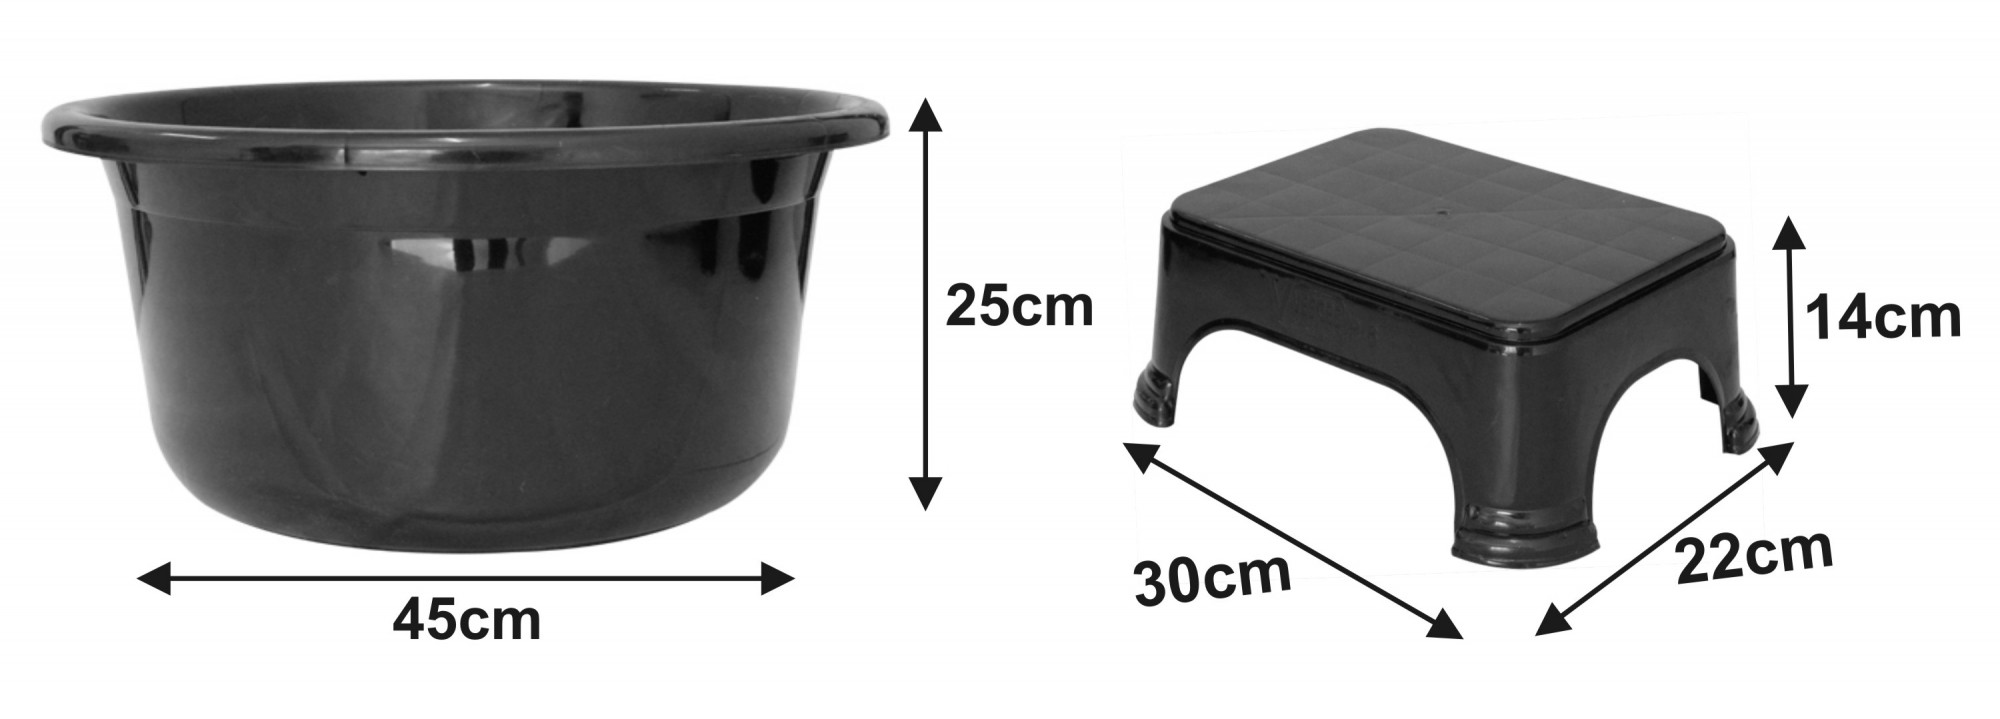 Kuber Industries 2 Pieces Unbreakable Virgin Plastic Multipurpose Bathroom Tub & Stool Set (Black)